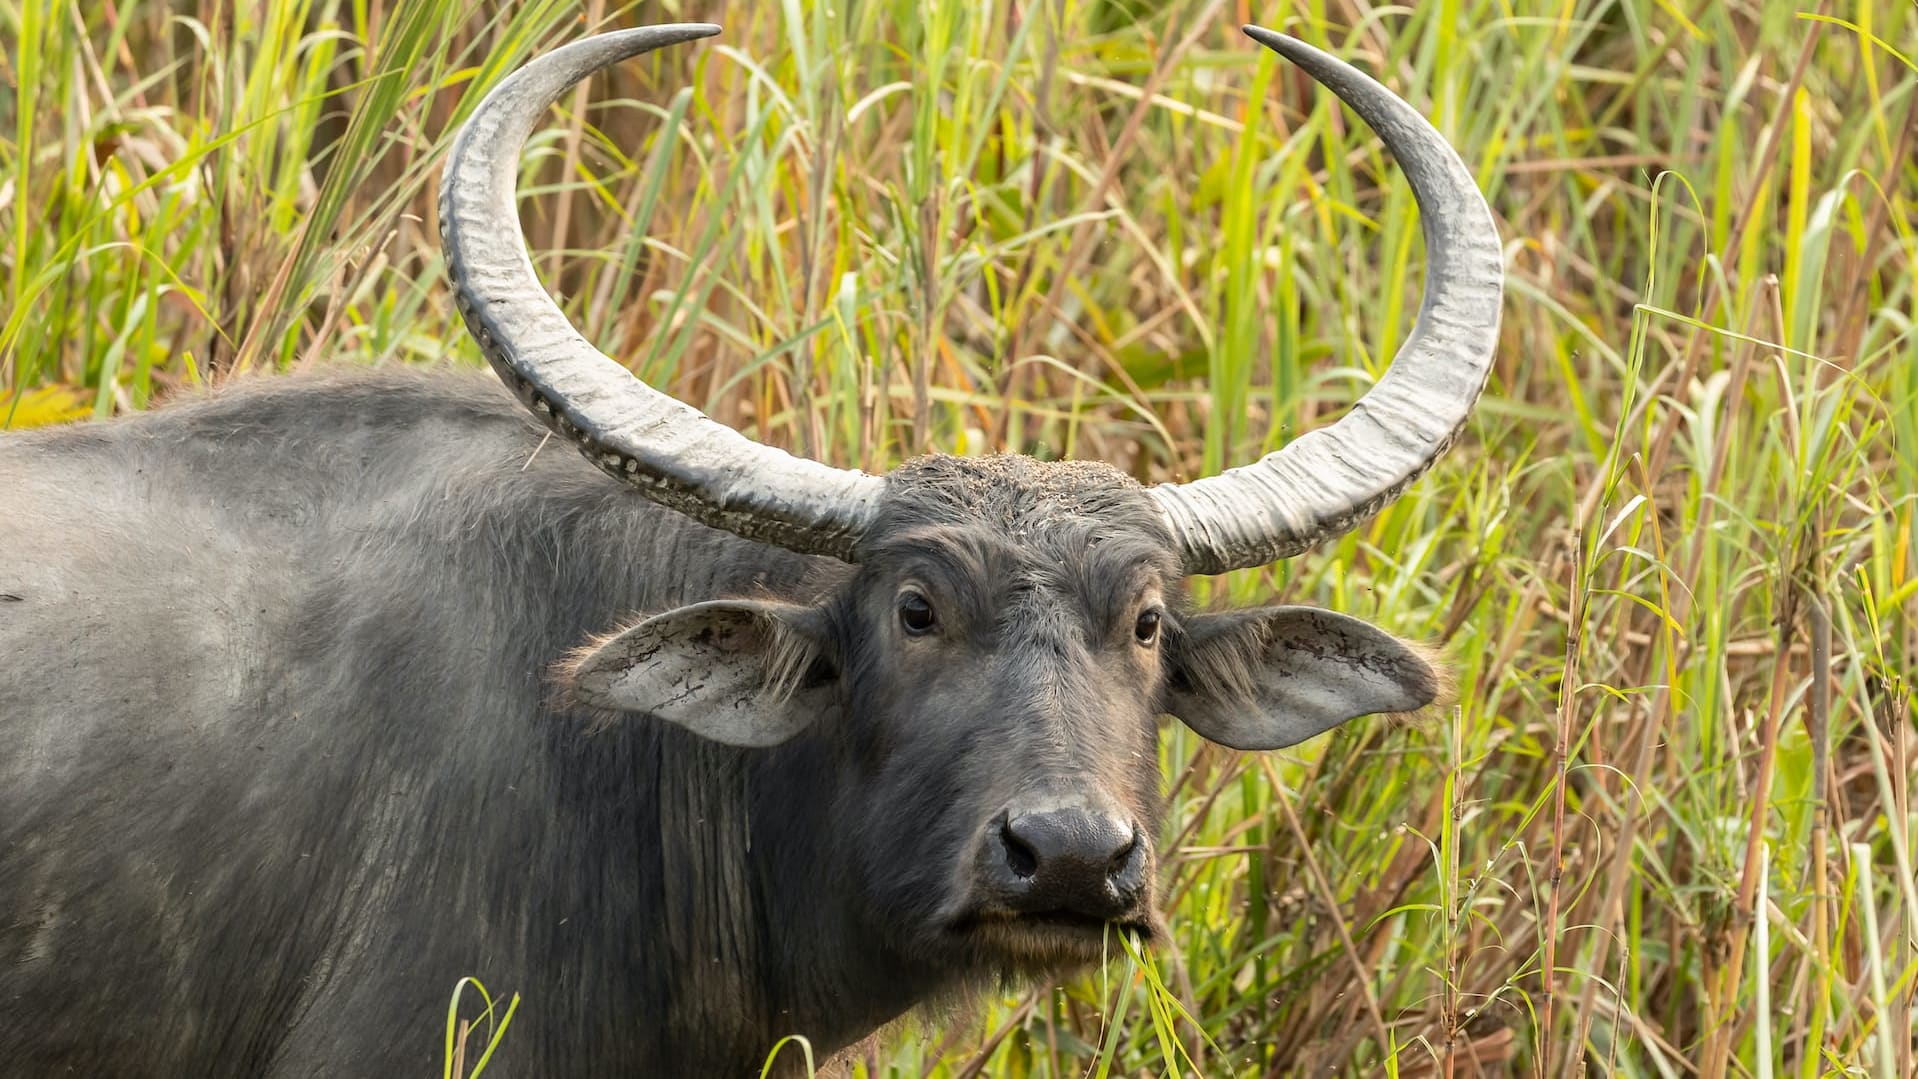 Wild water buffalo - Wikipedia